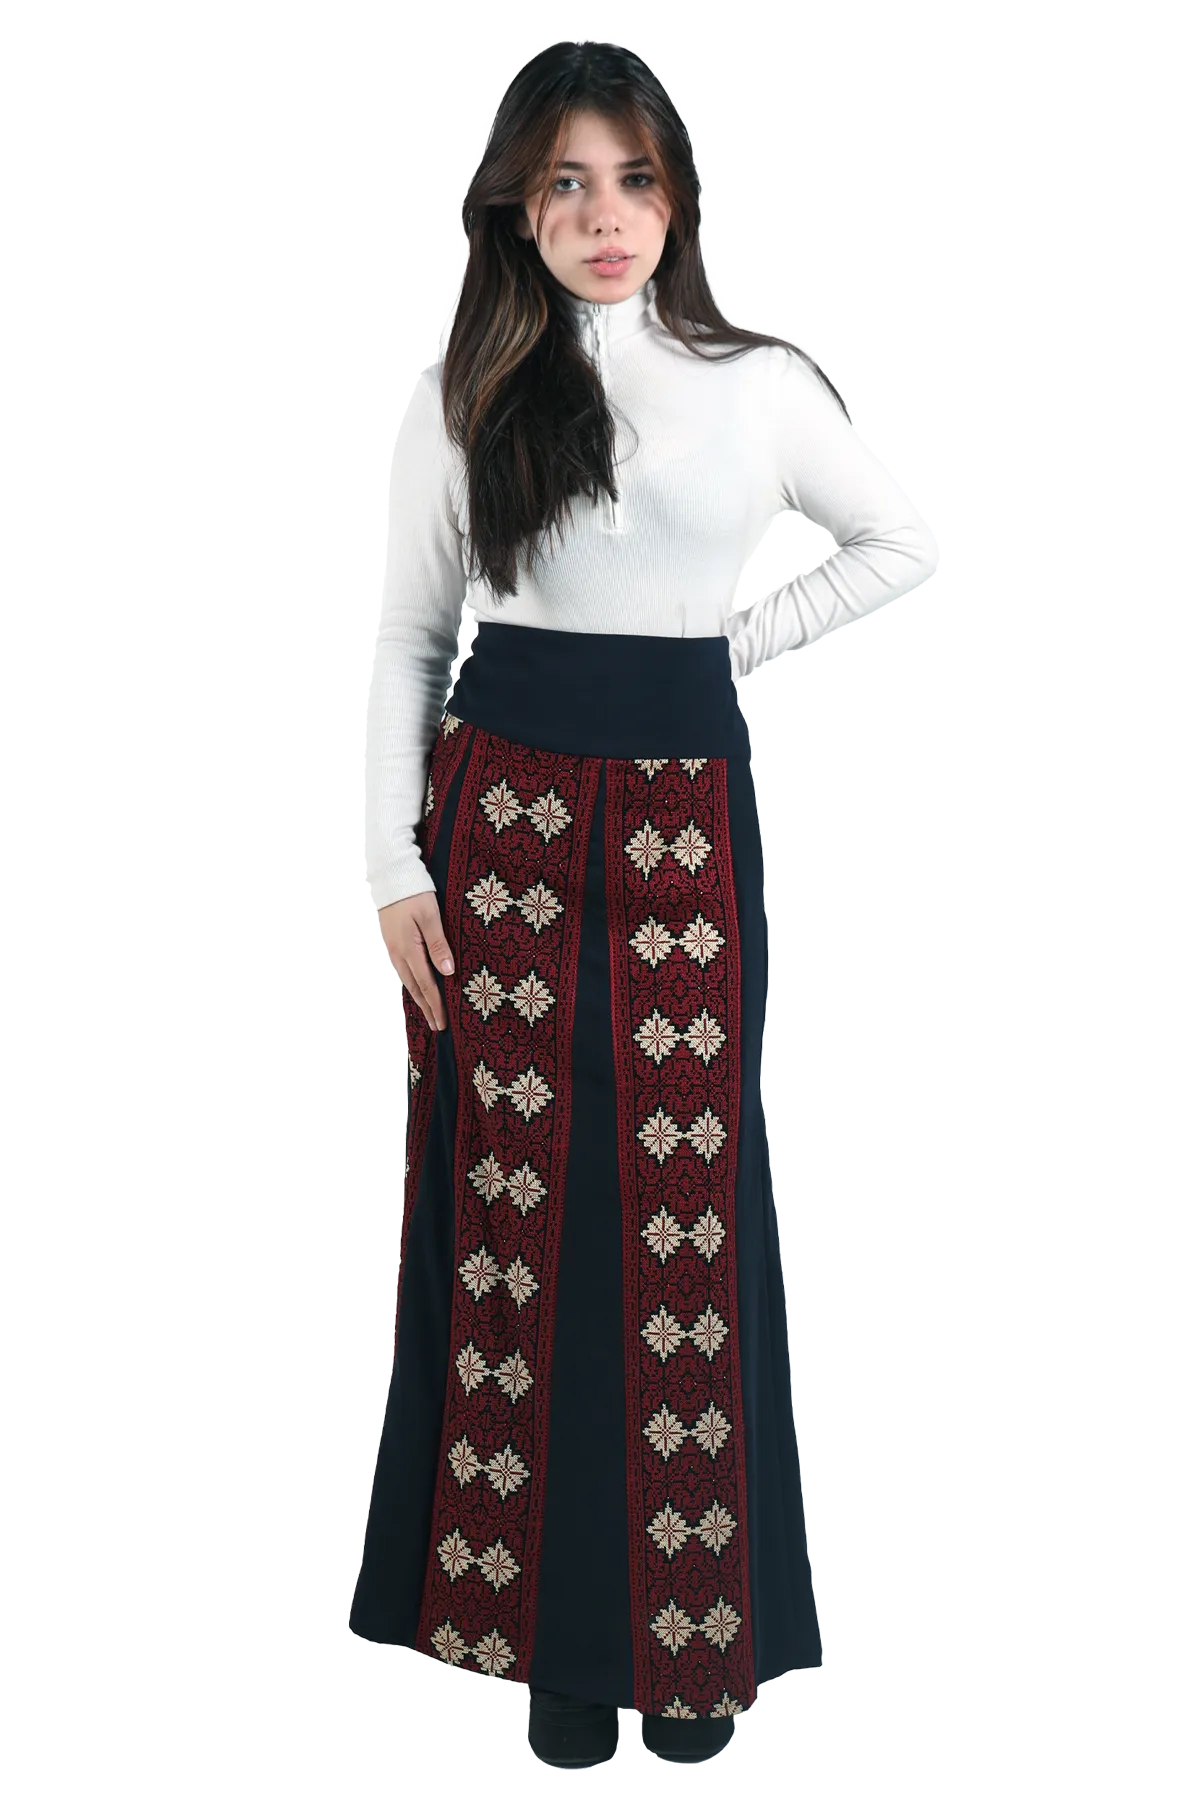 Traditional skirt